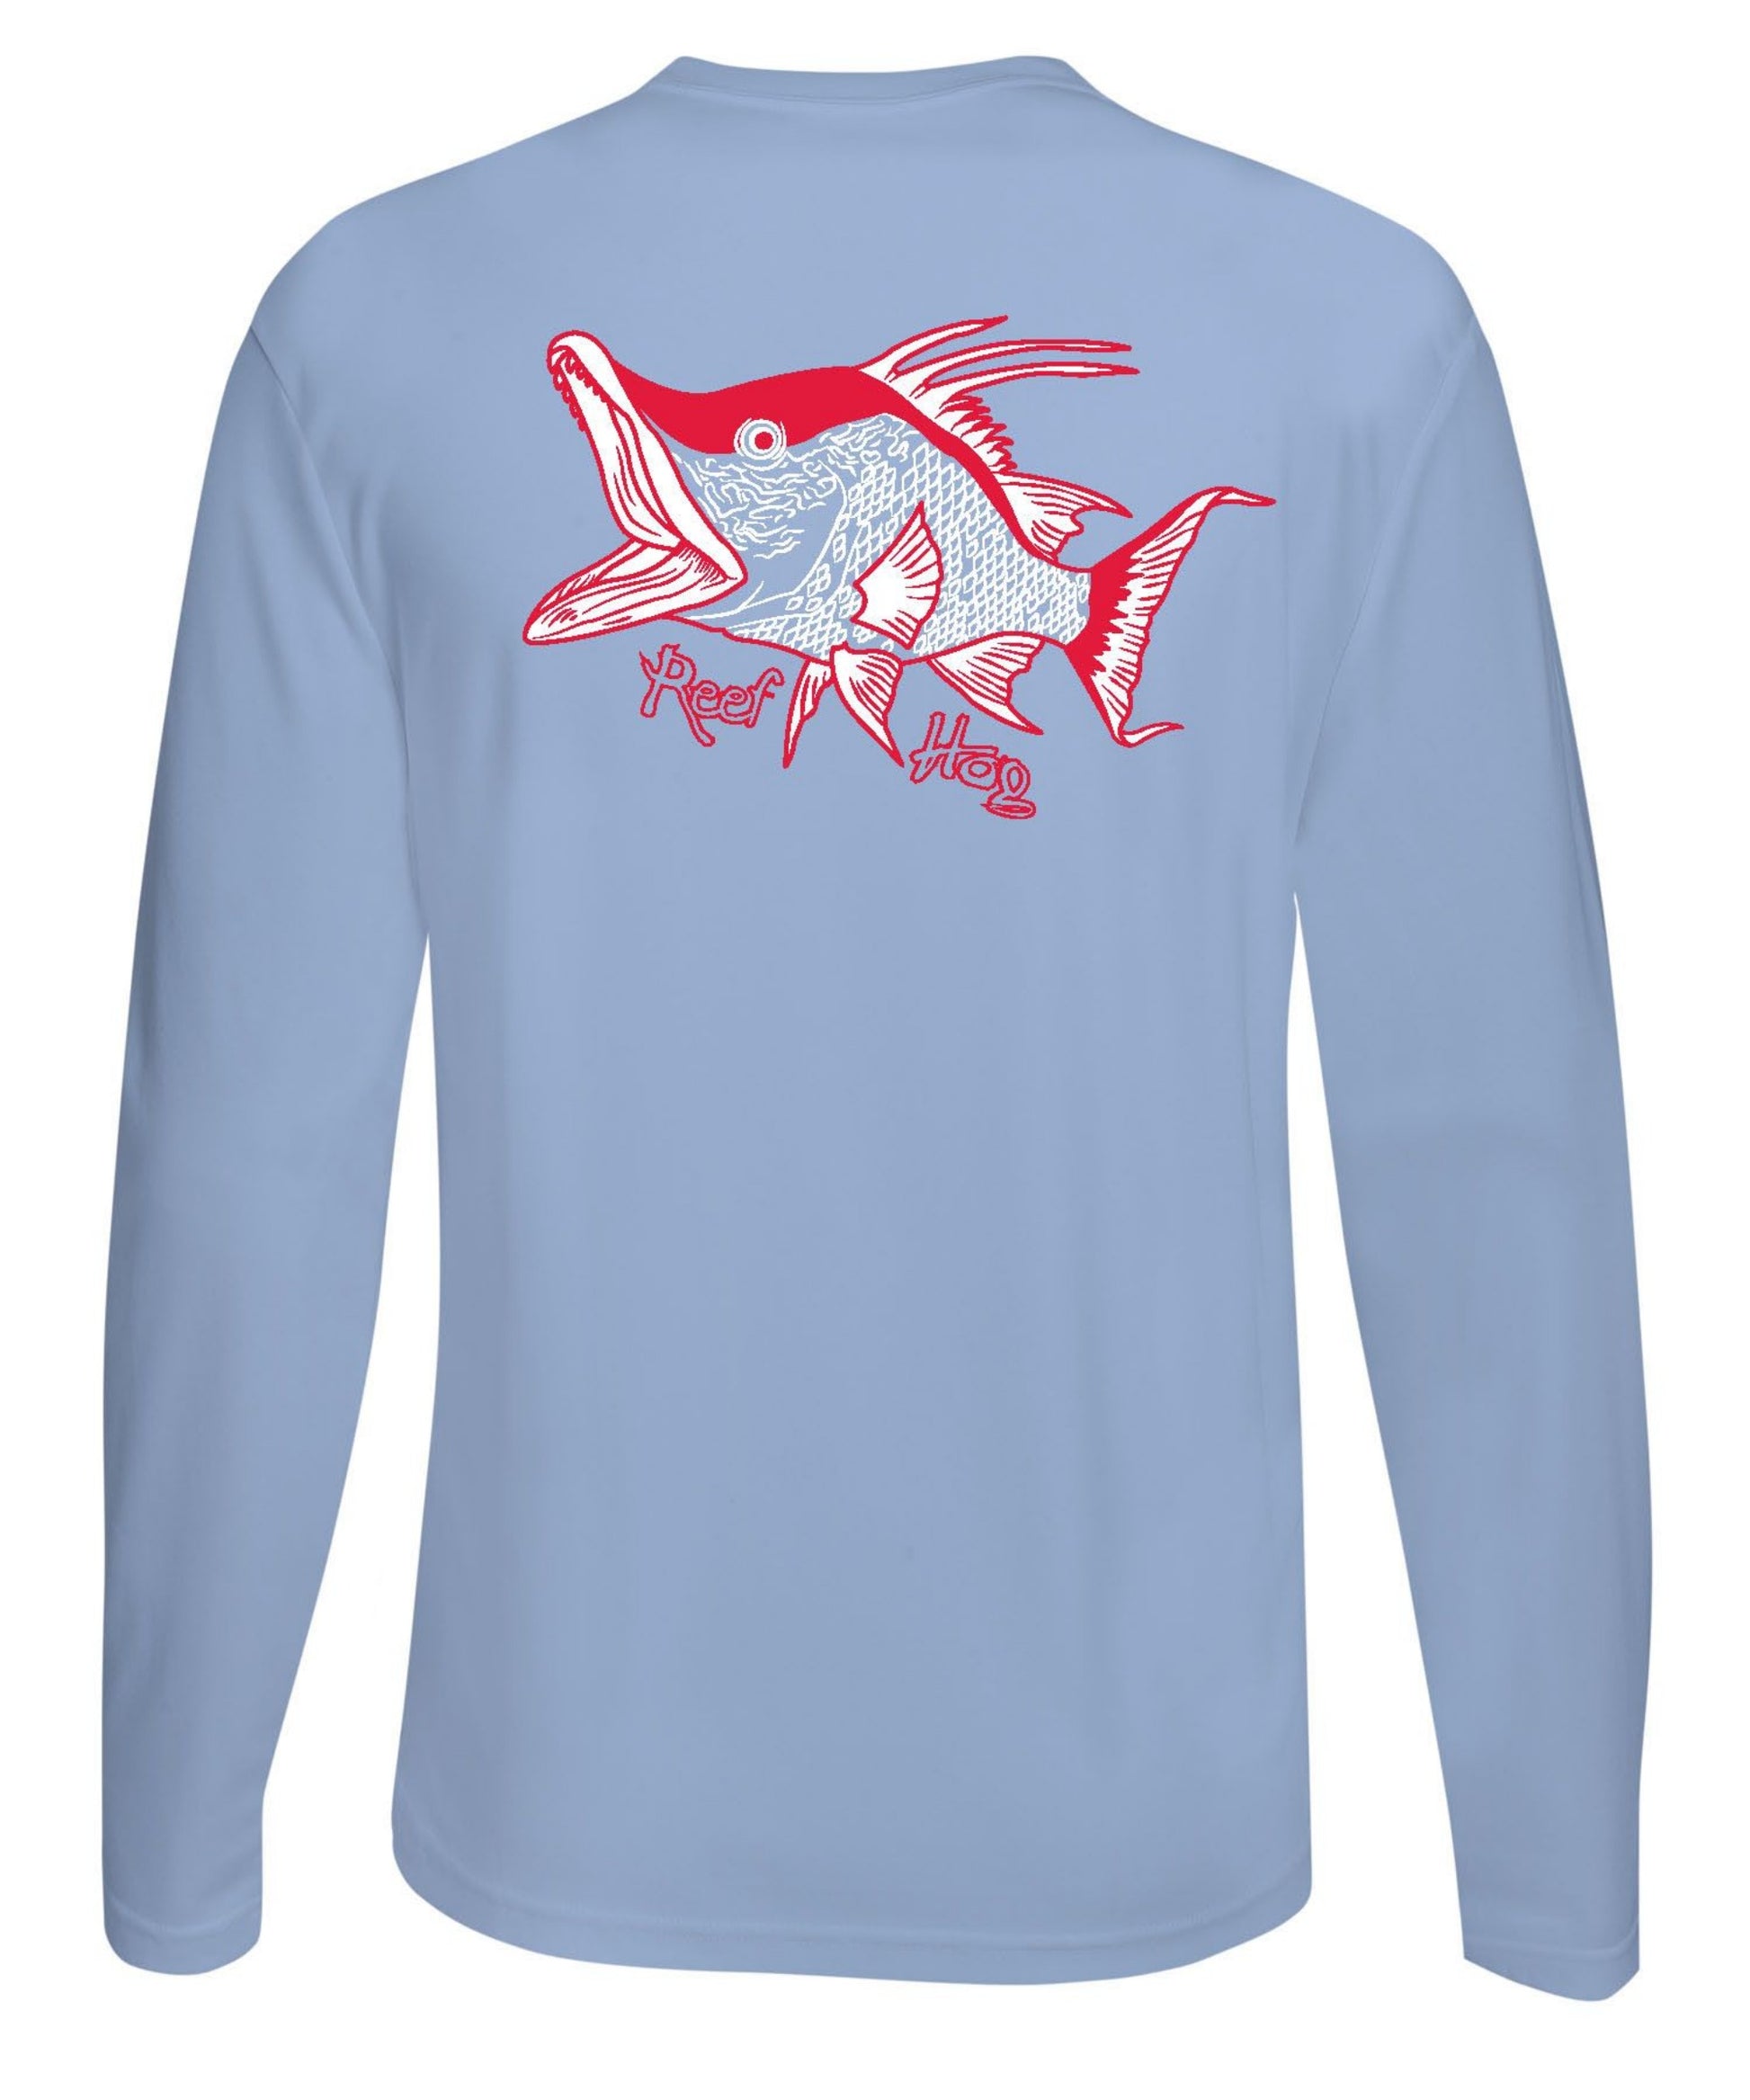 Hogfish Reef Hog Performance Dry-Fit Fishing 50+Upf Sun Shirts M / Lt. Blue L/S - unisex